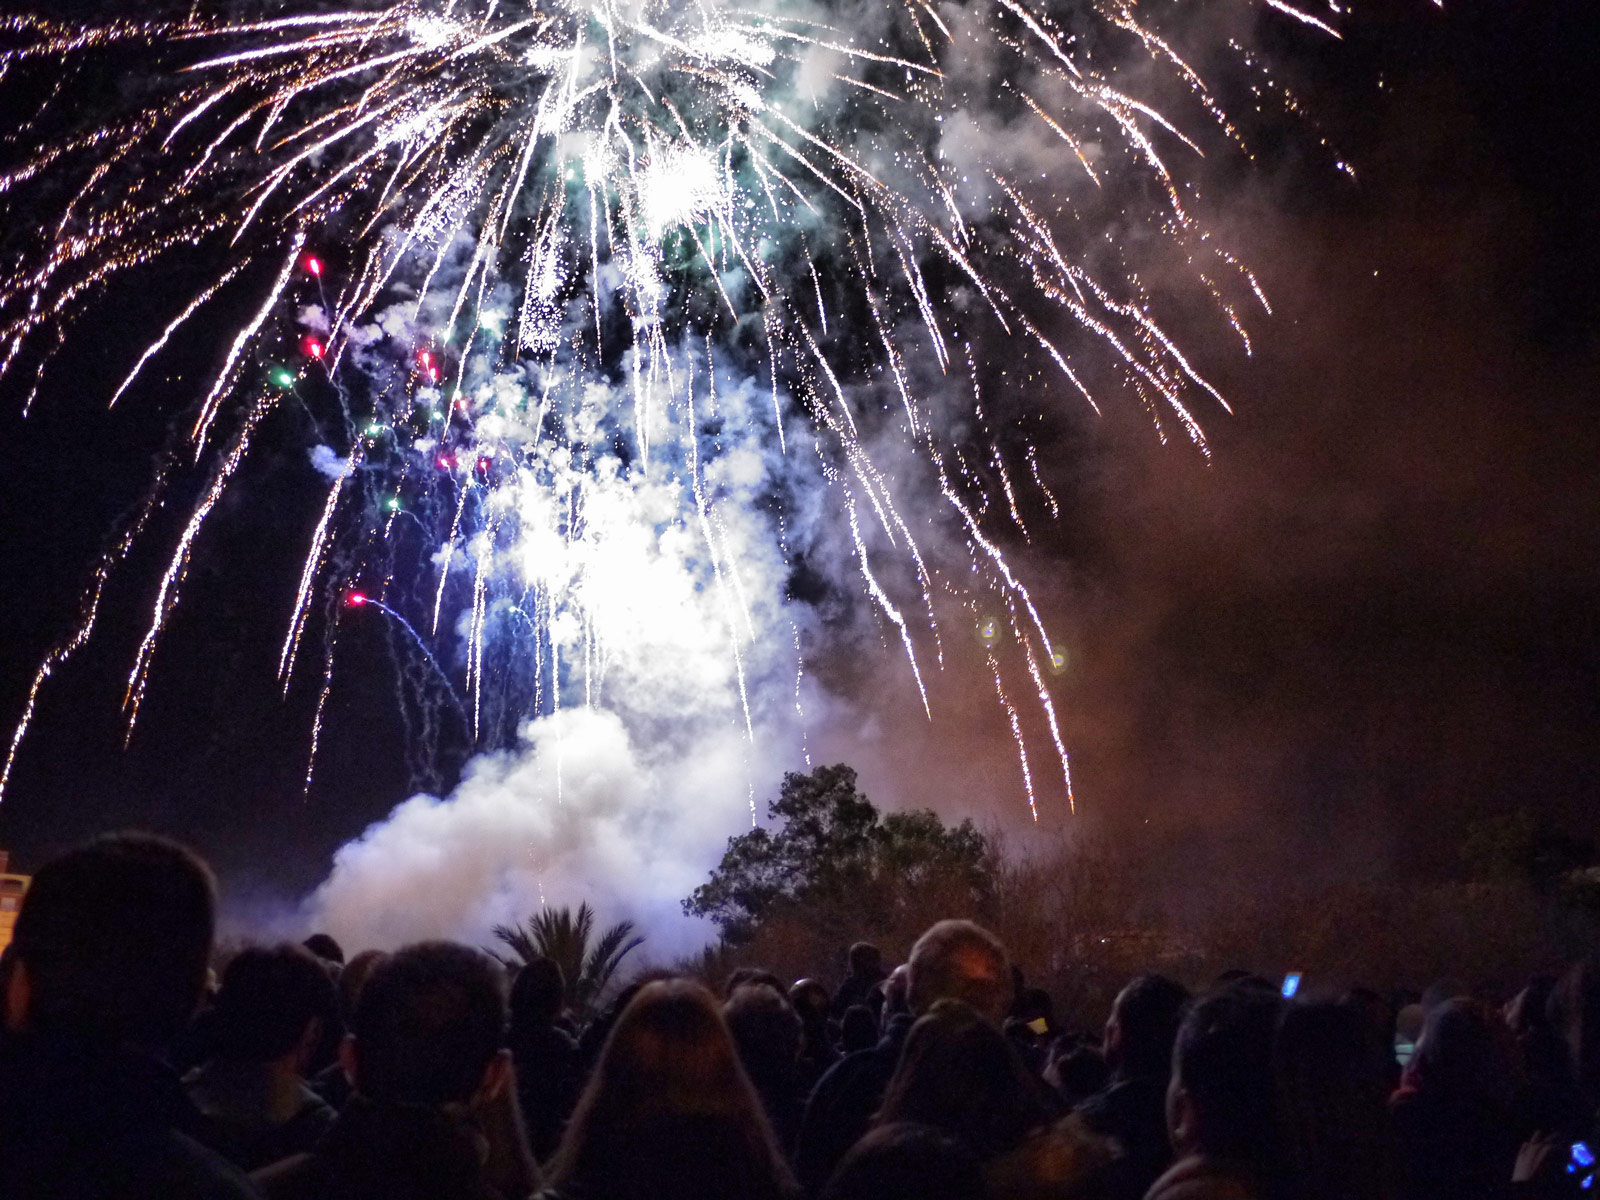 See Fireworks at the Las Fallas Festival Valencia